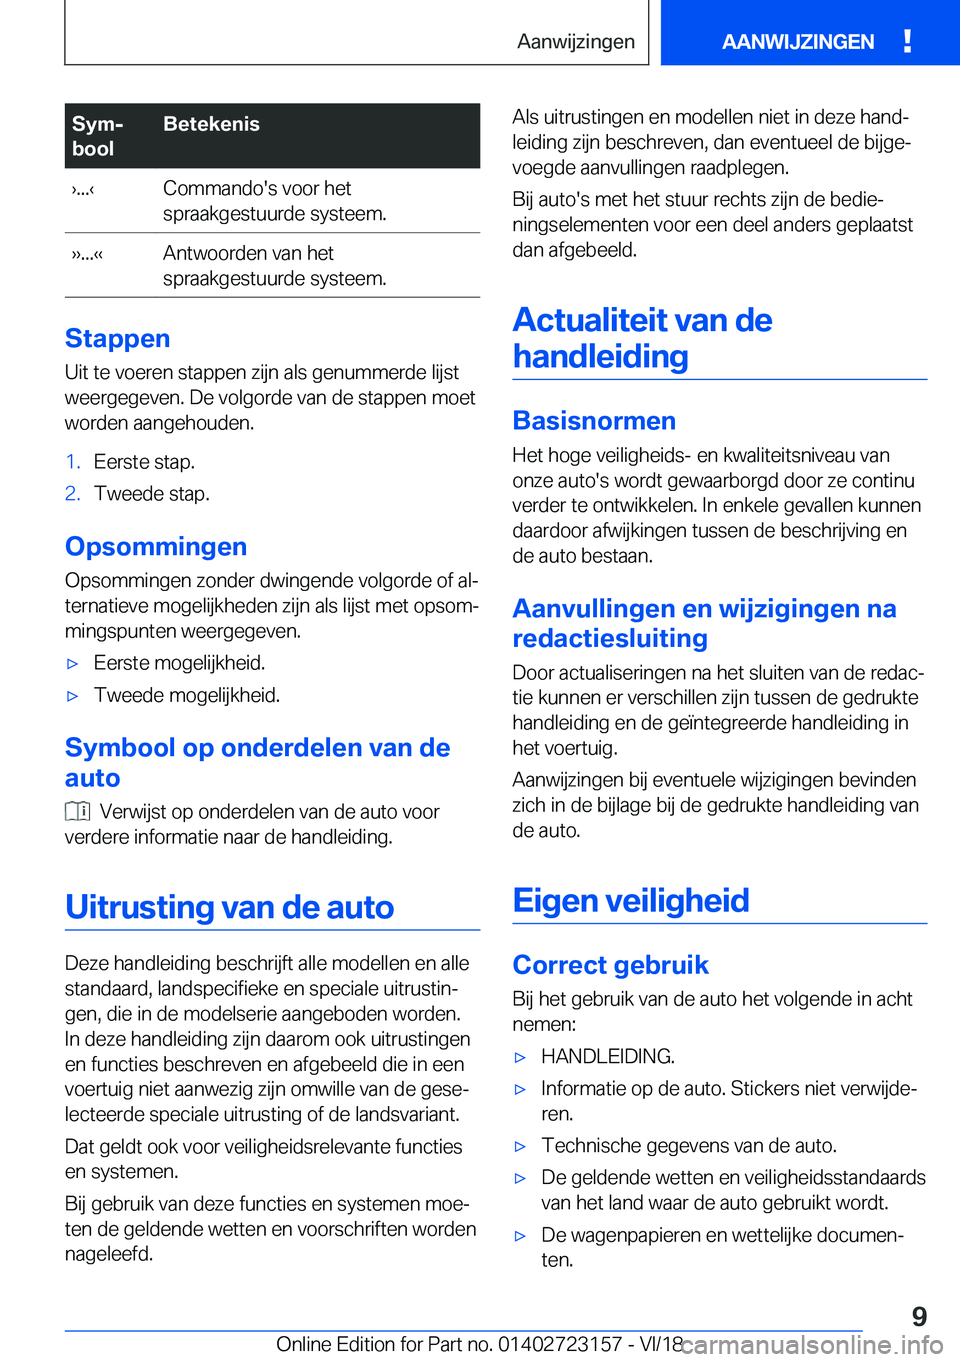 BMW 4 SERIES GRAN COUPE 2019  Instructieboekjes (in Dutch) �S�y�mj
�b�o�o�l�B�e�t�e�k�e�n�i�s